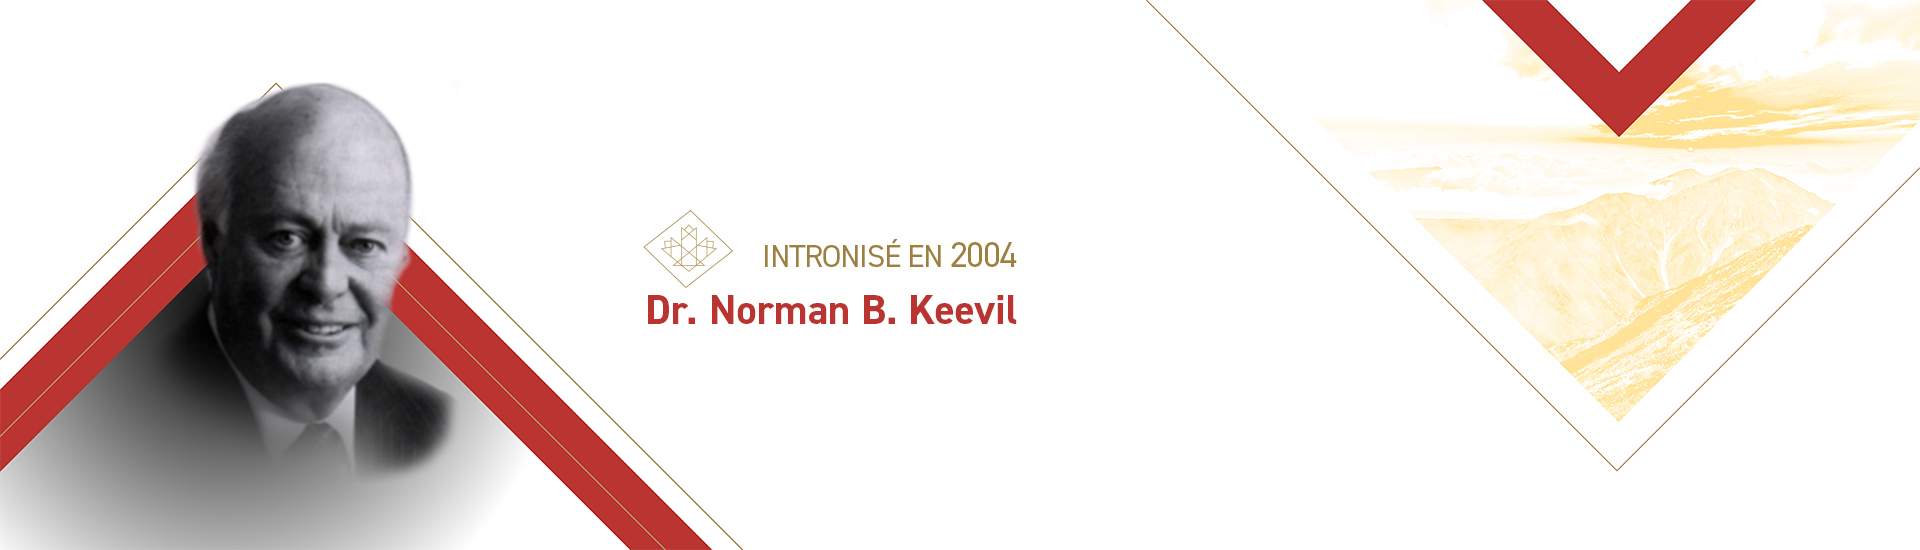 Dr. Norman B. Keevil (b. 1938)